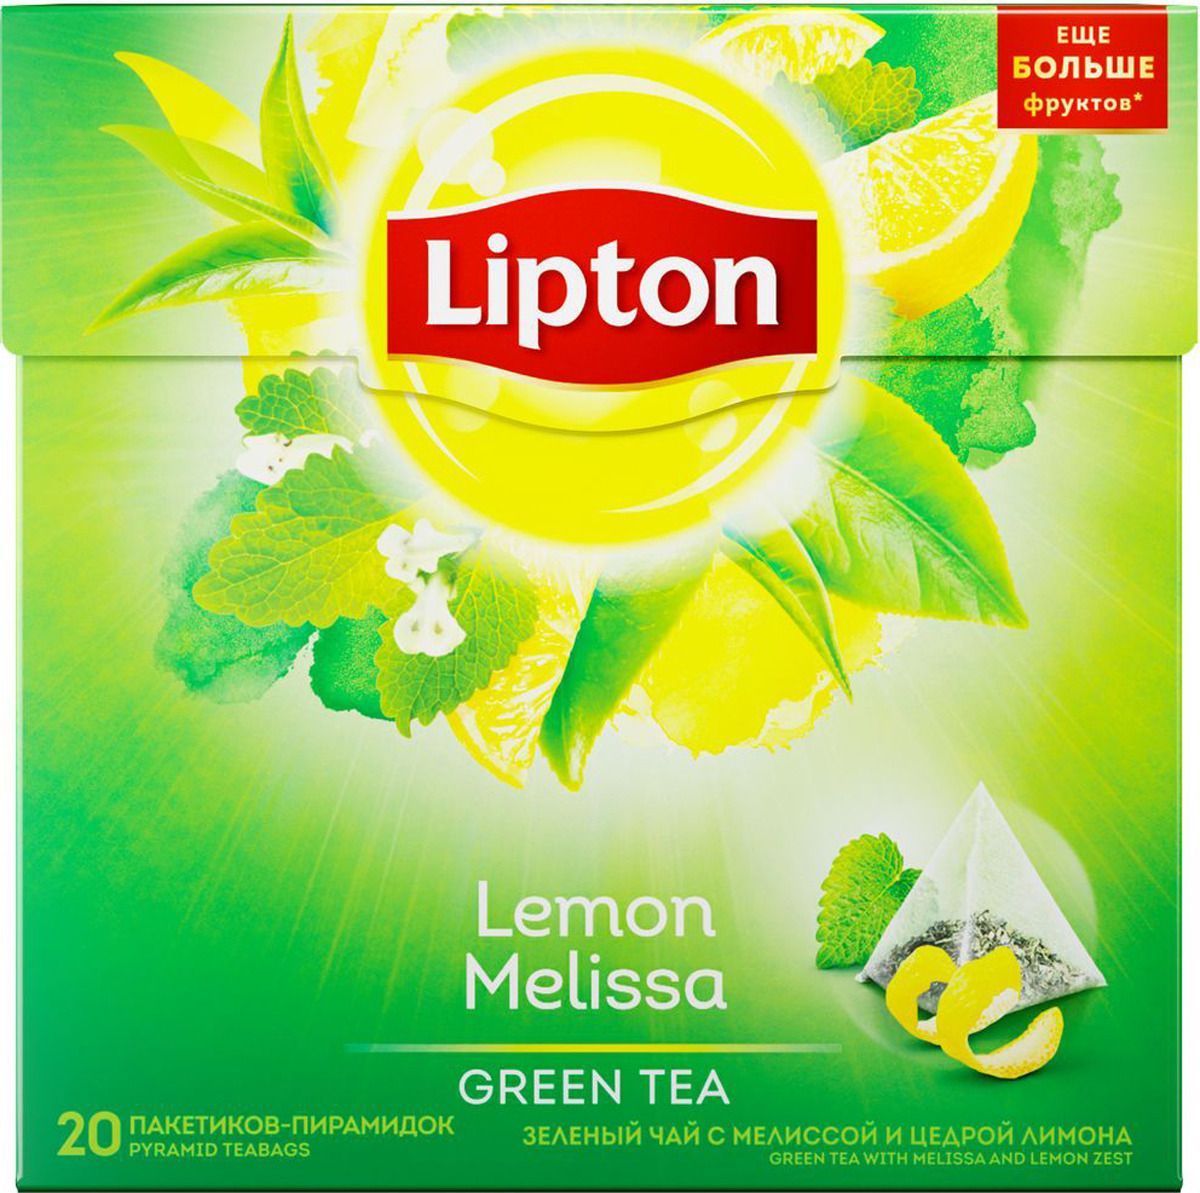 Lipton Lemon Melissa Green Tea         20 